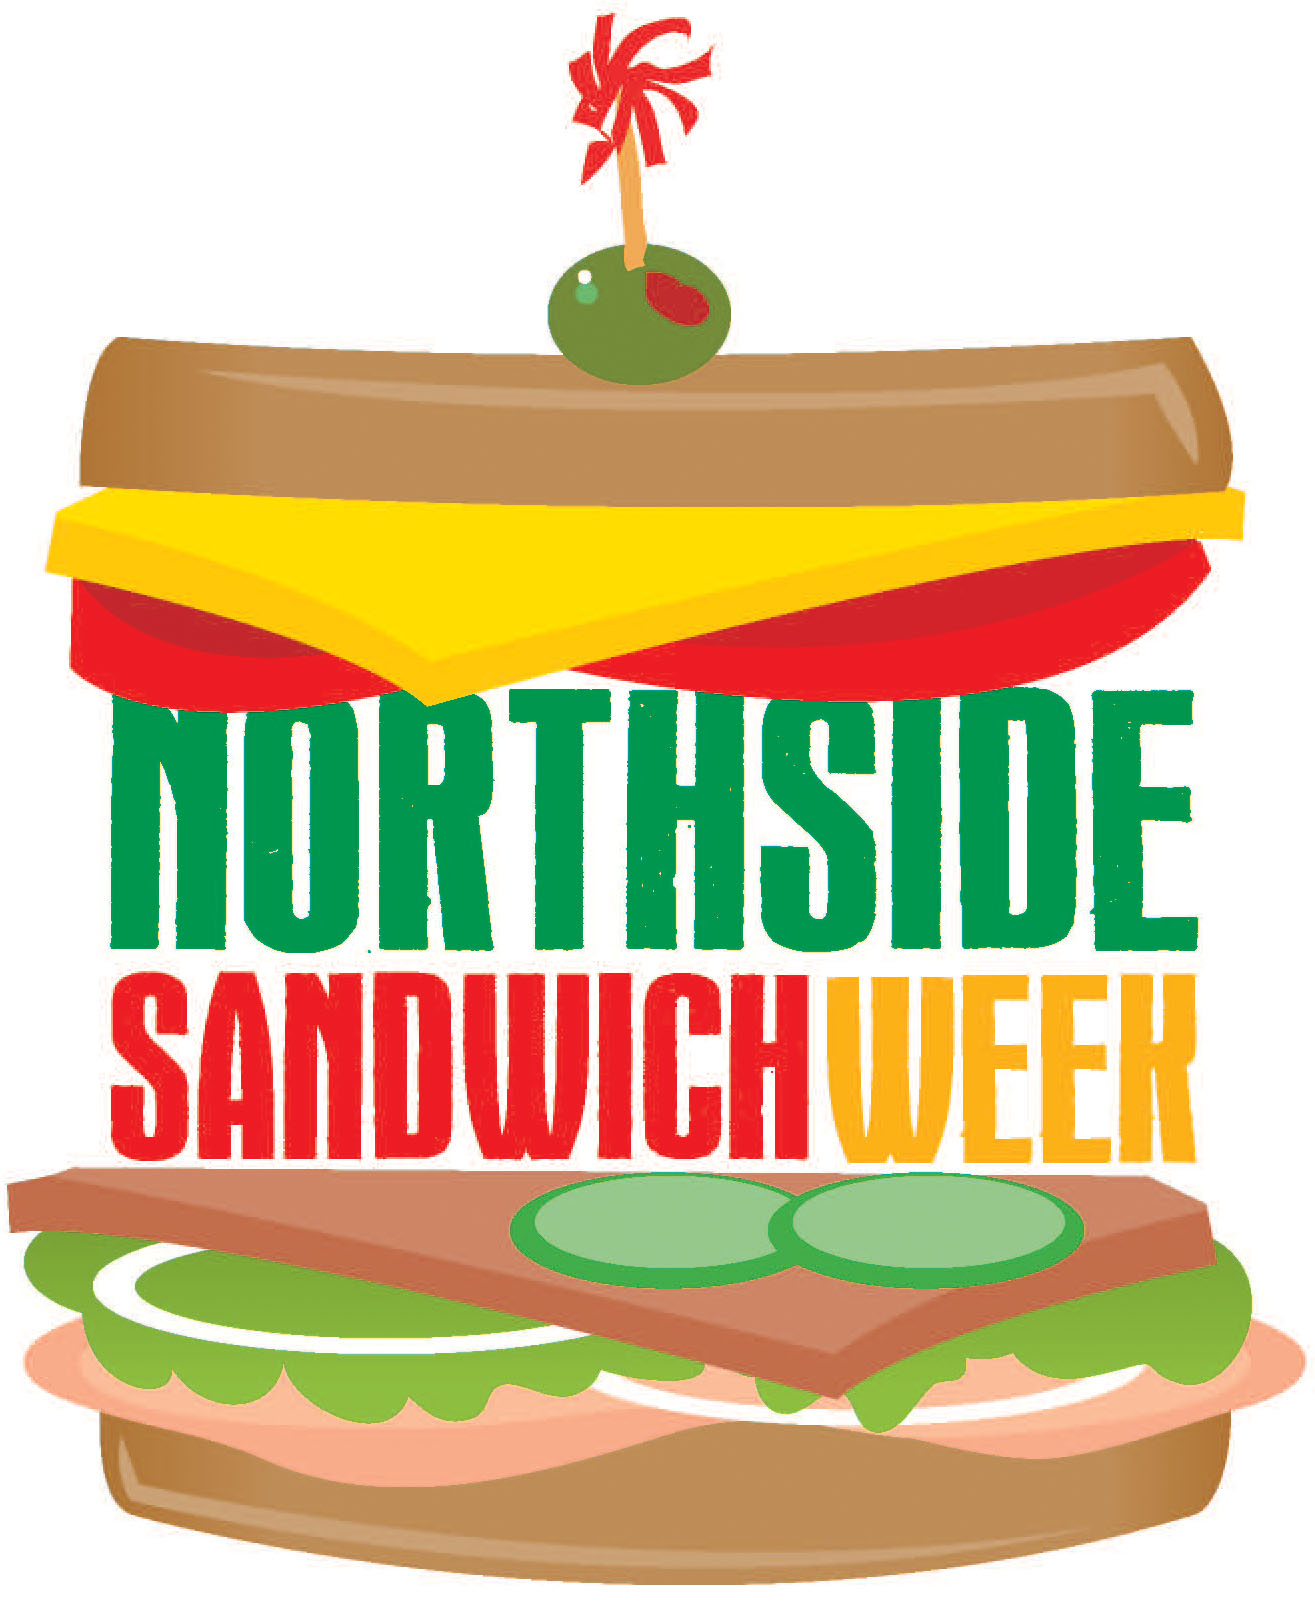 pittsburgh's northside sandwich week logo